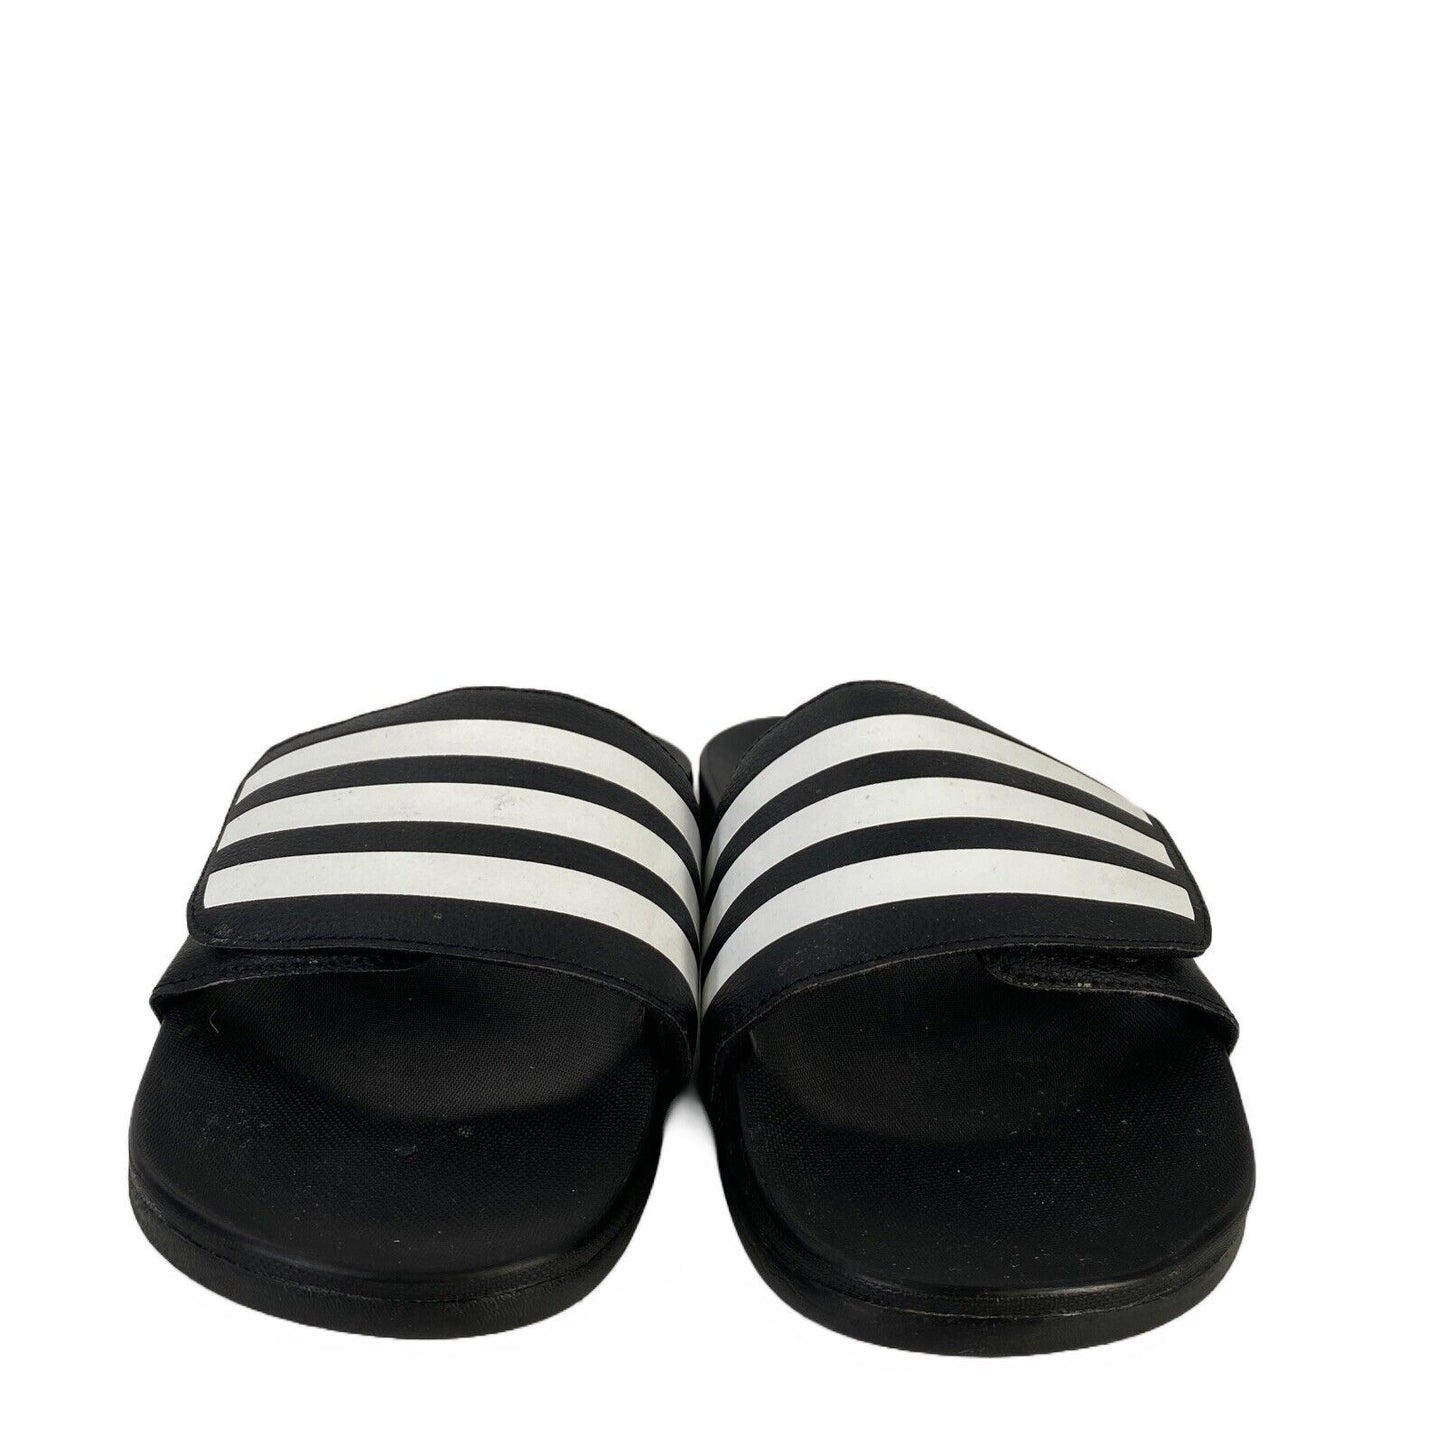 Adidas Men's Black Synthetic 3-Stripe Slides Sandals - 9